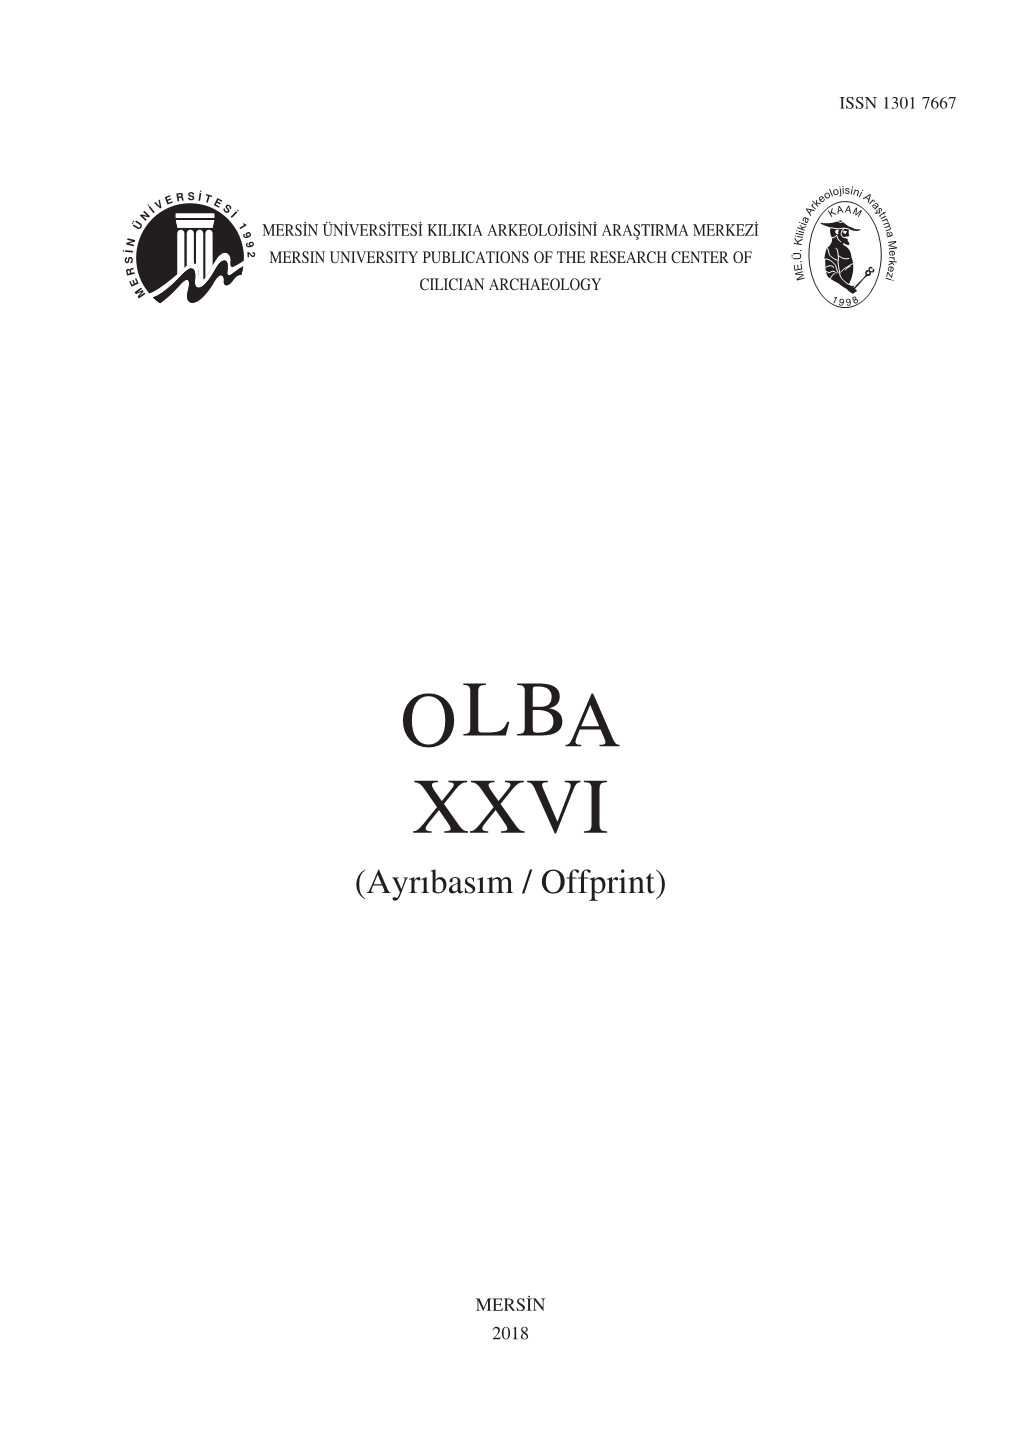 OLBA XXVI (Ayrıbasım / Offprint)